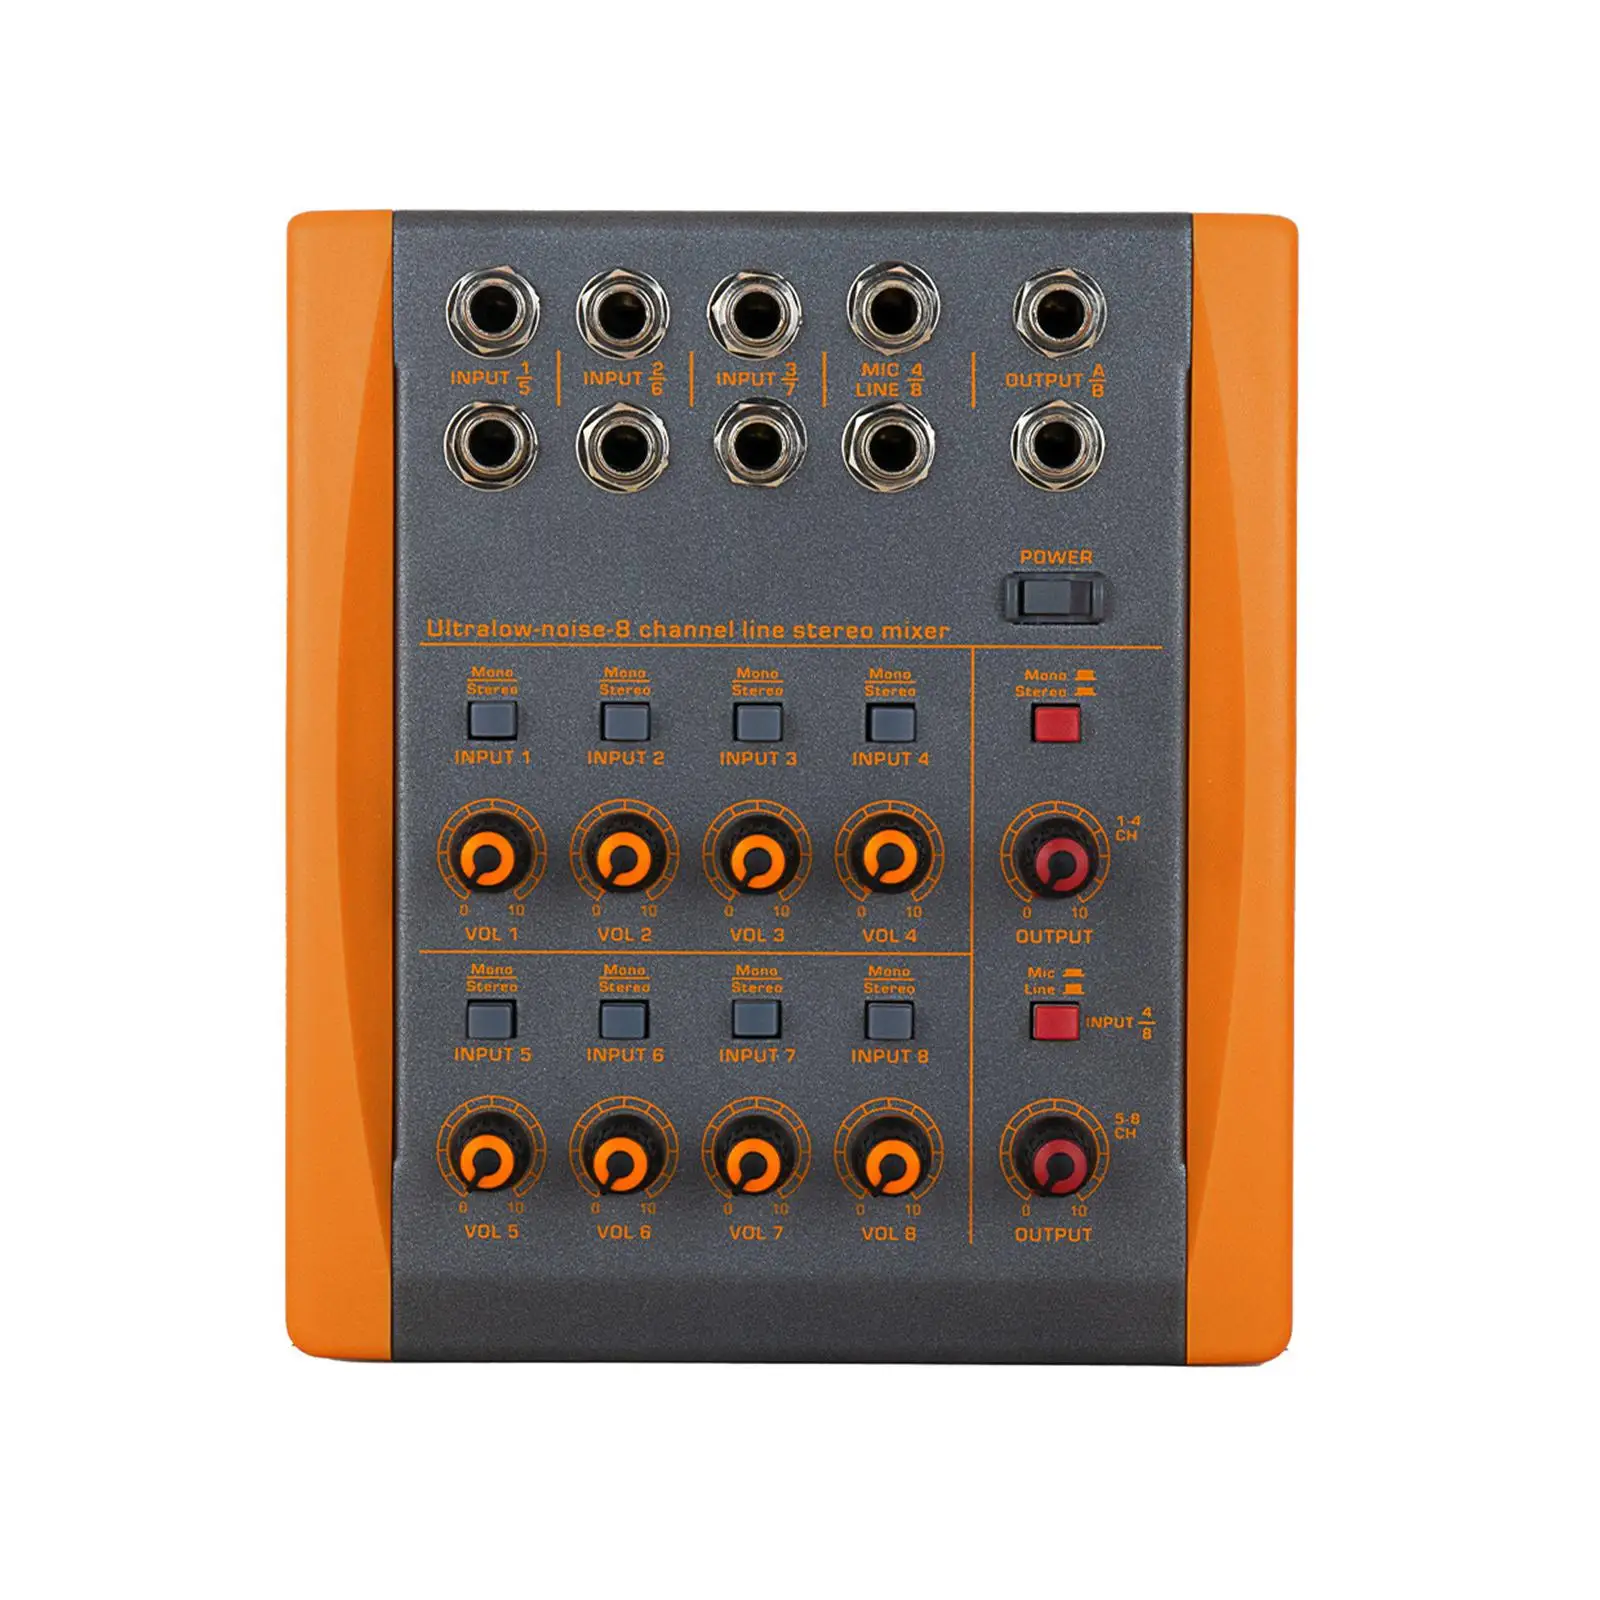 https://ae01.alicdn.com/kf/S854f99a6eabc4bbf89ac9cef163caffd5/8-Channel-Audio-Sound-Mixer-Compact-Mixer-Compact-Stereo-Mixer-Sound-Board-Console-8-Stereo-Ultra.jpg